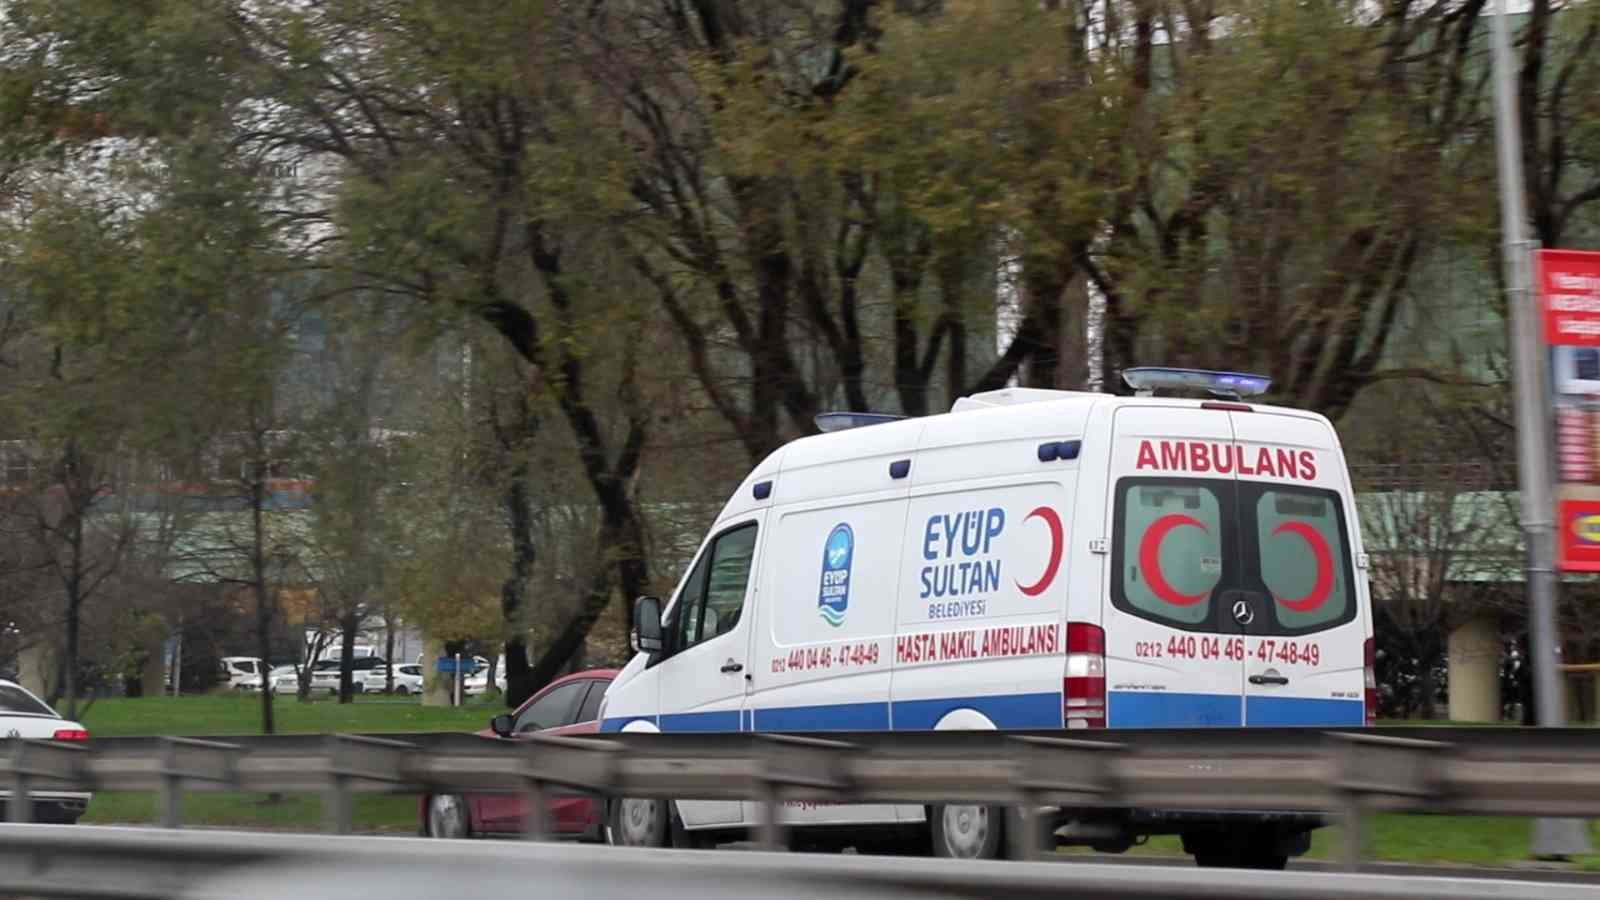 Eyüpsultan’da hasta nakil ambulans hizmeti